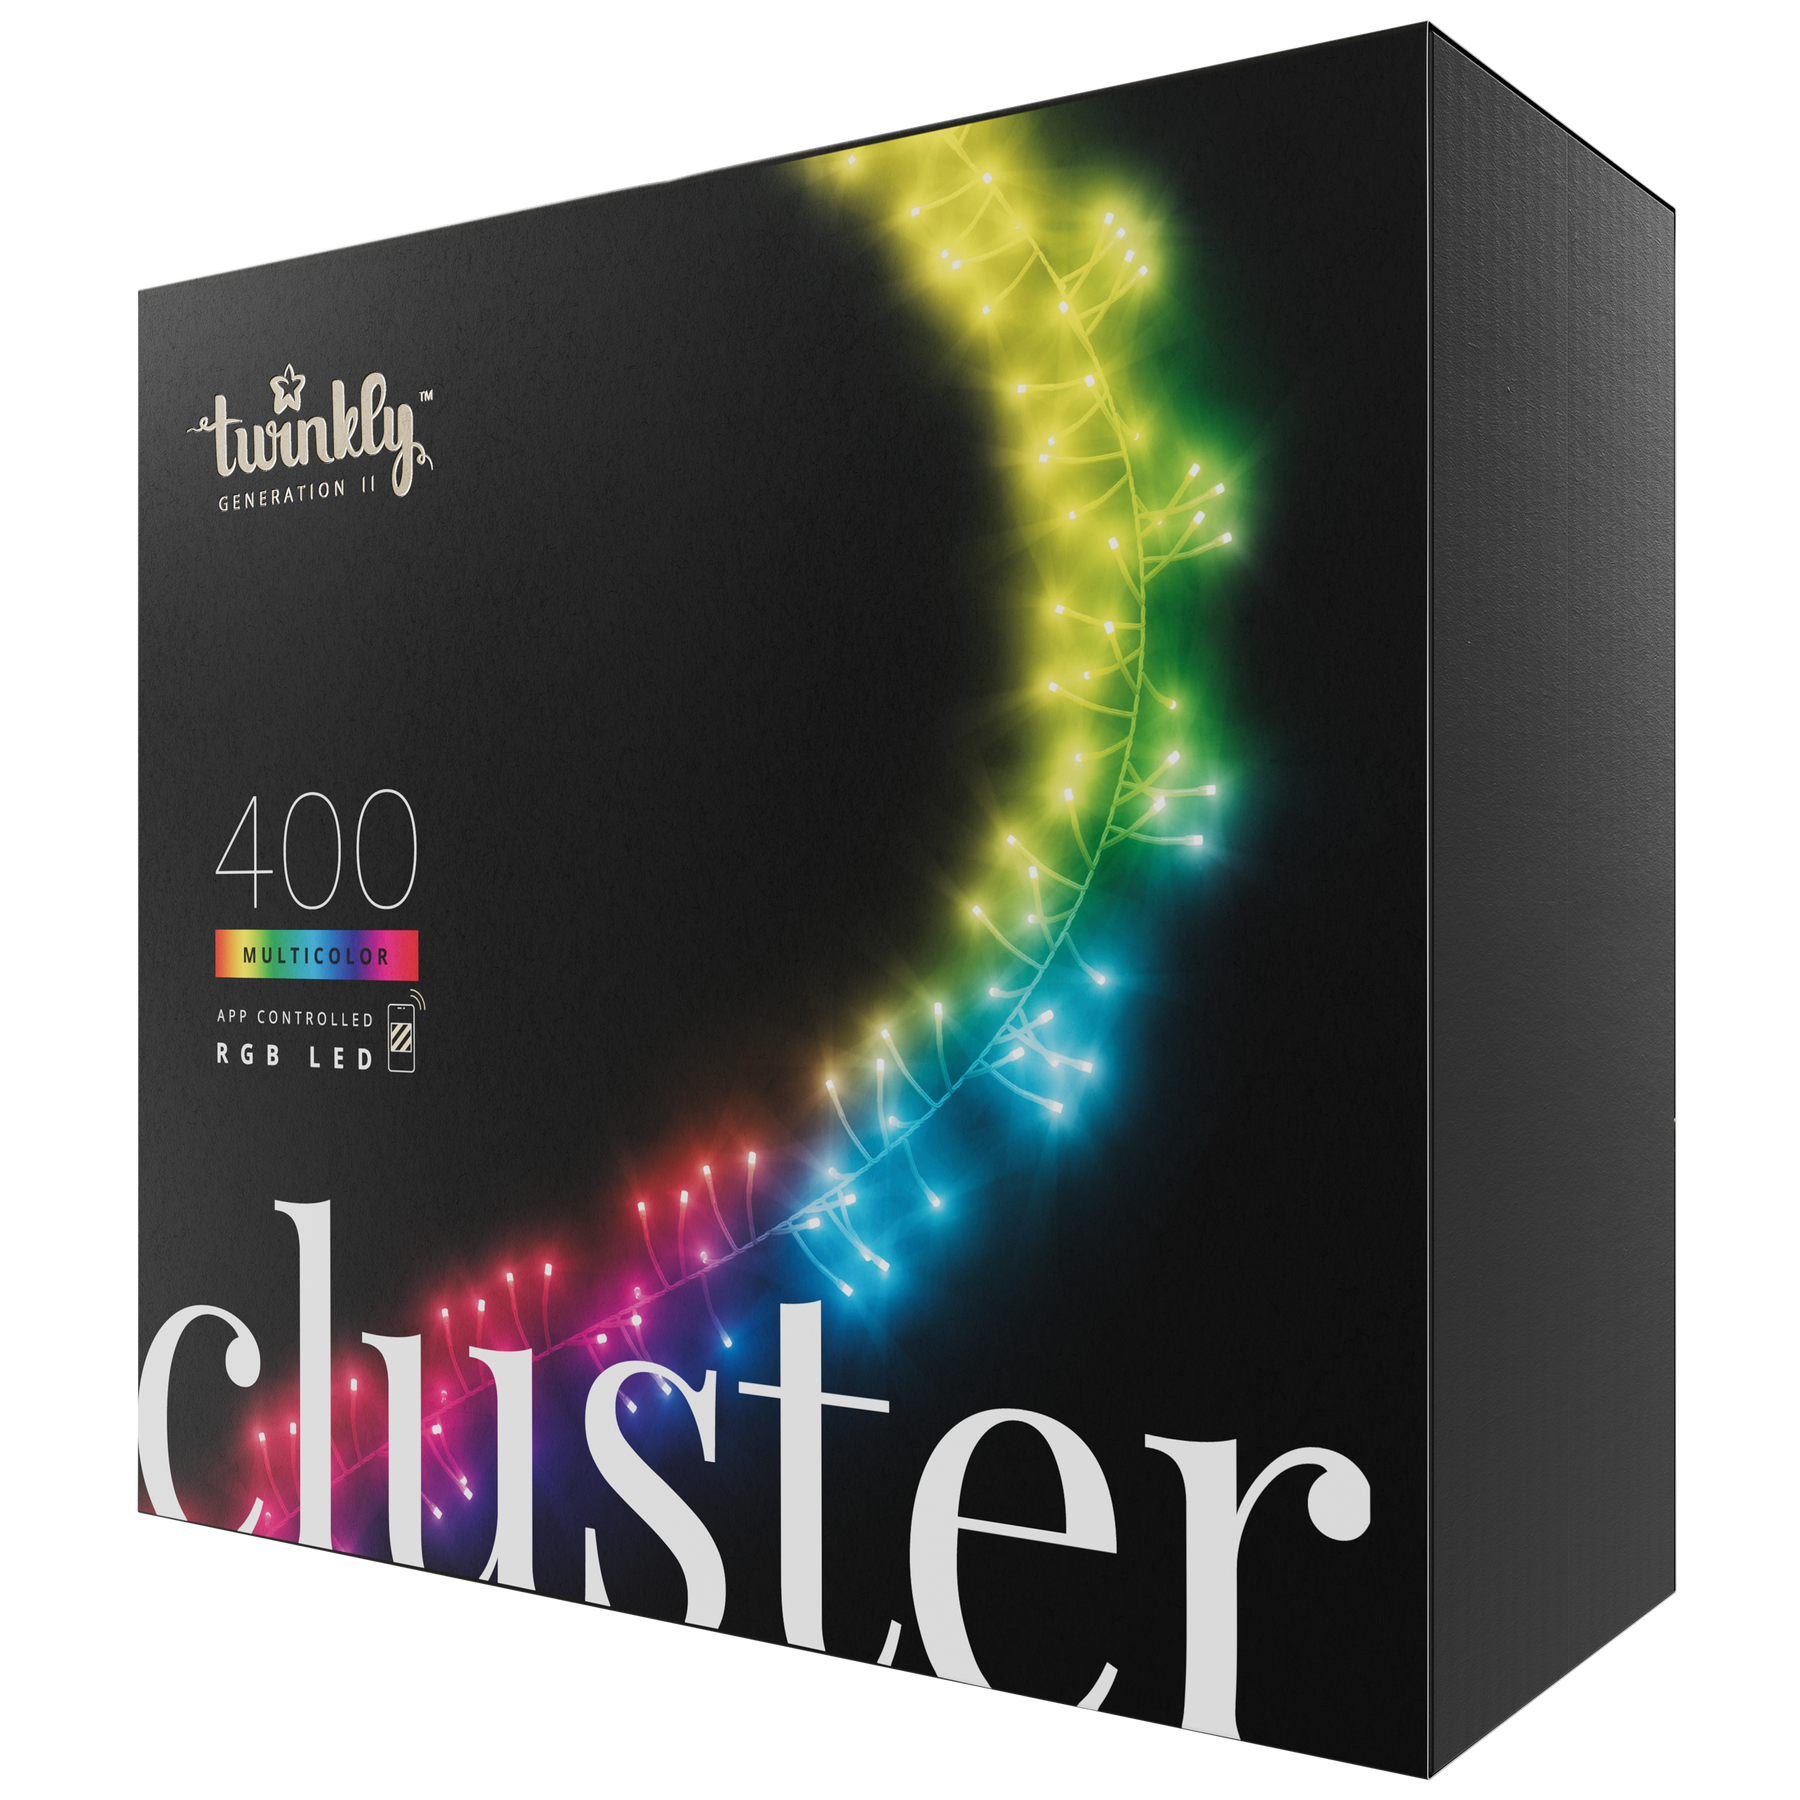 Cluster (многоцветное издание)